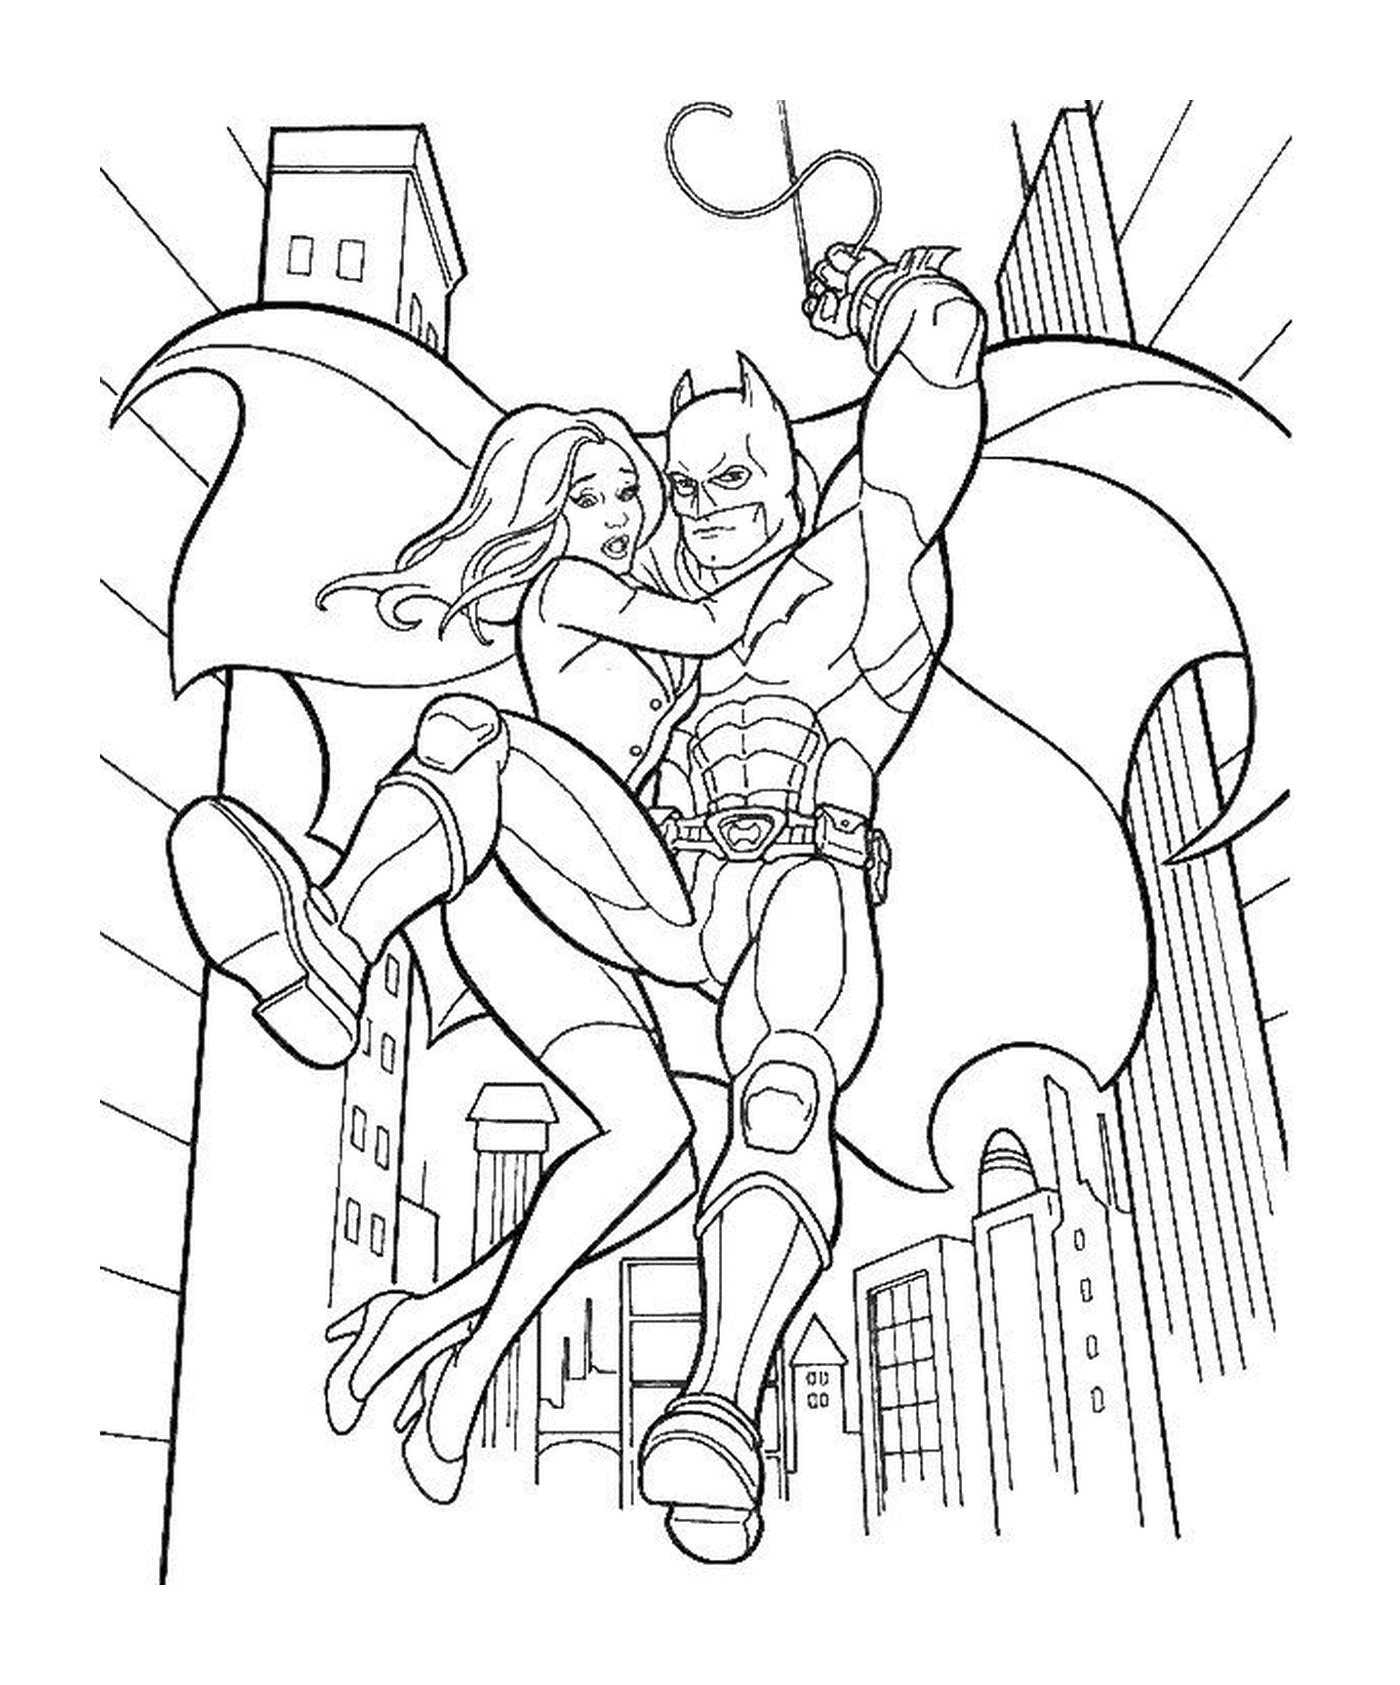  Бэтмен спасает женщину в городе 